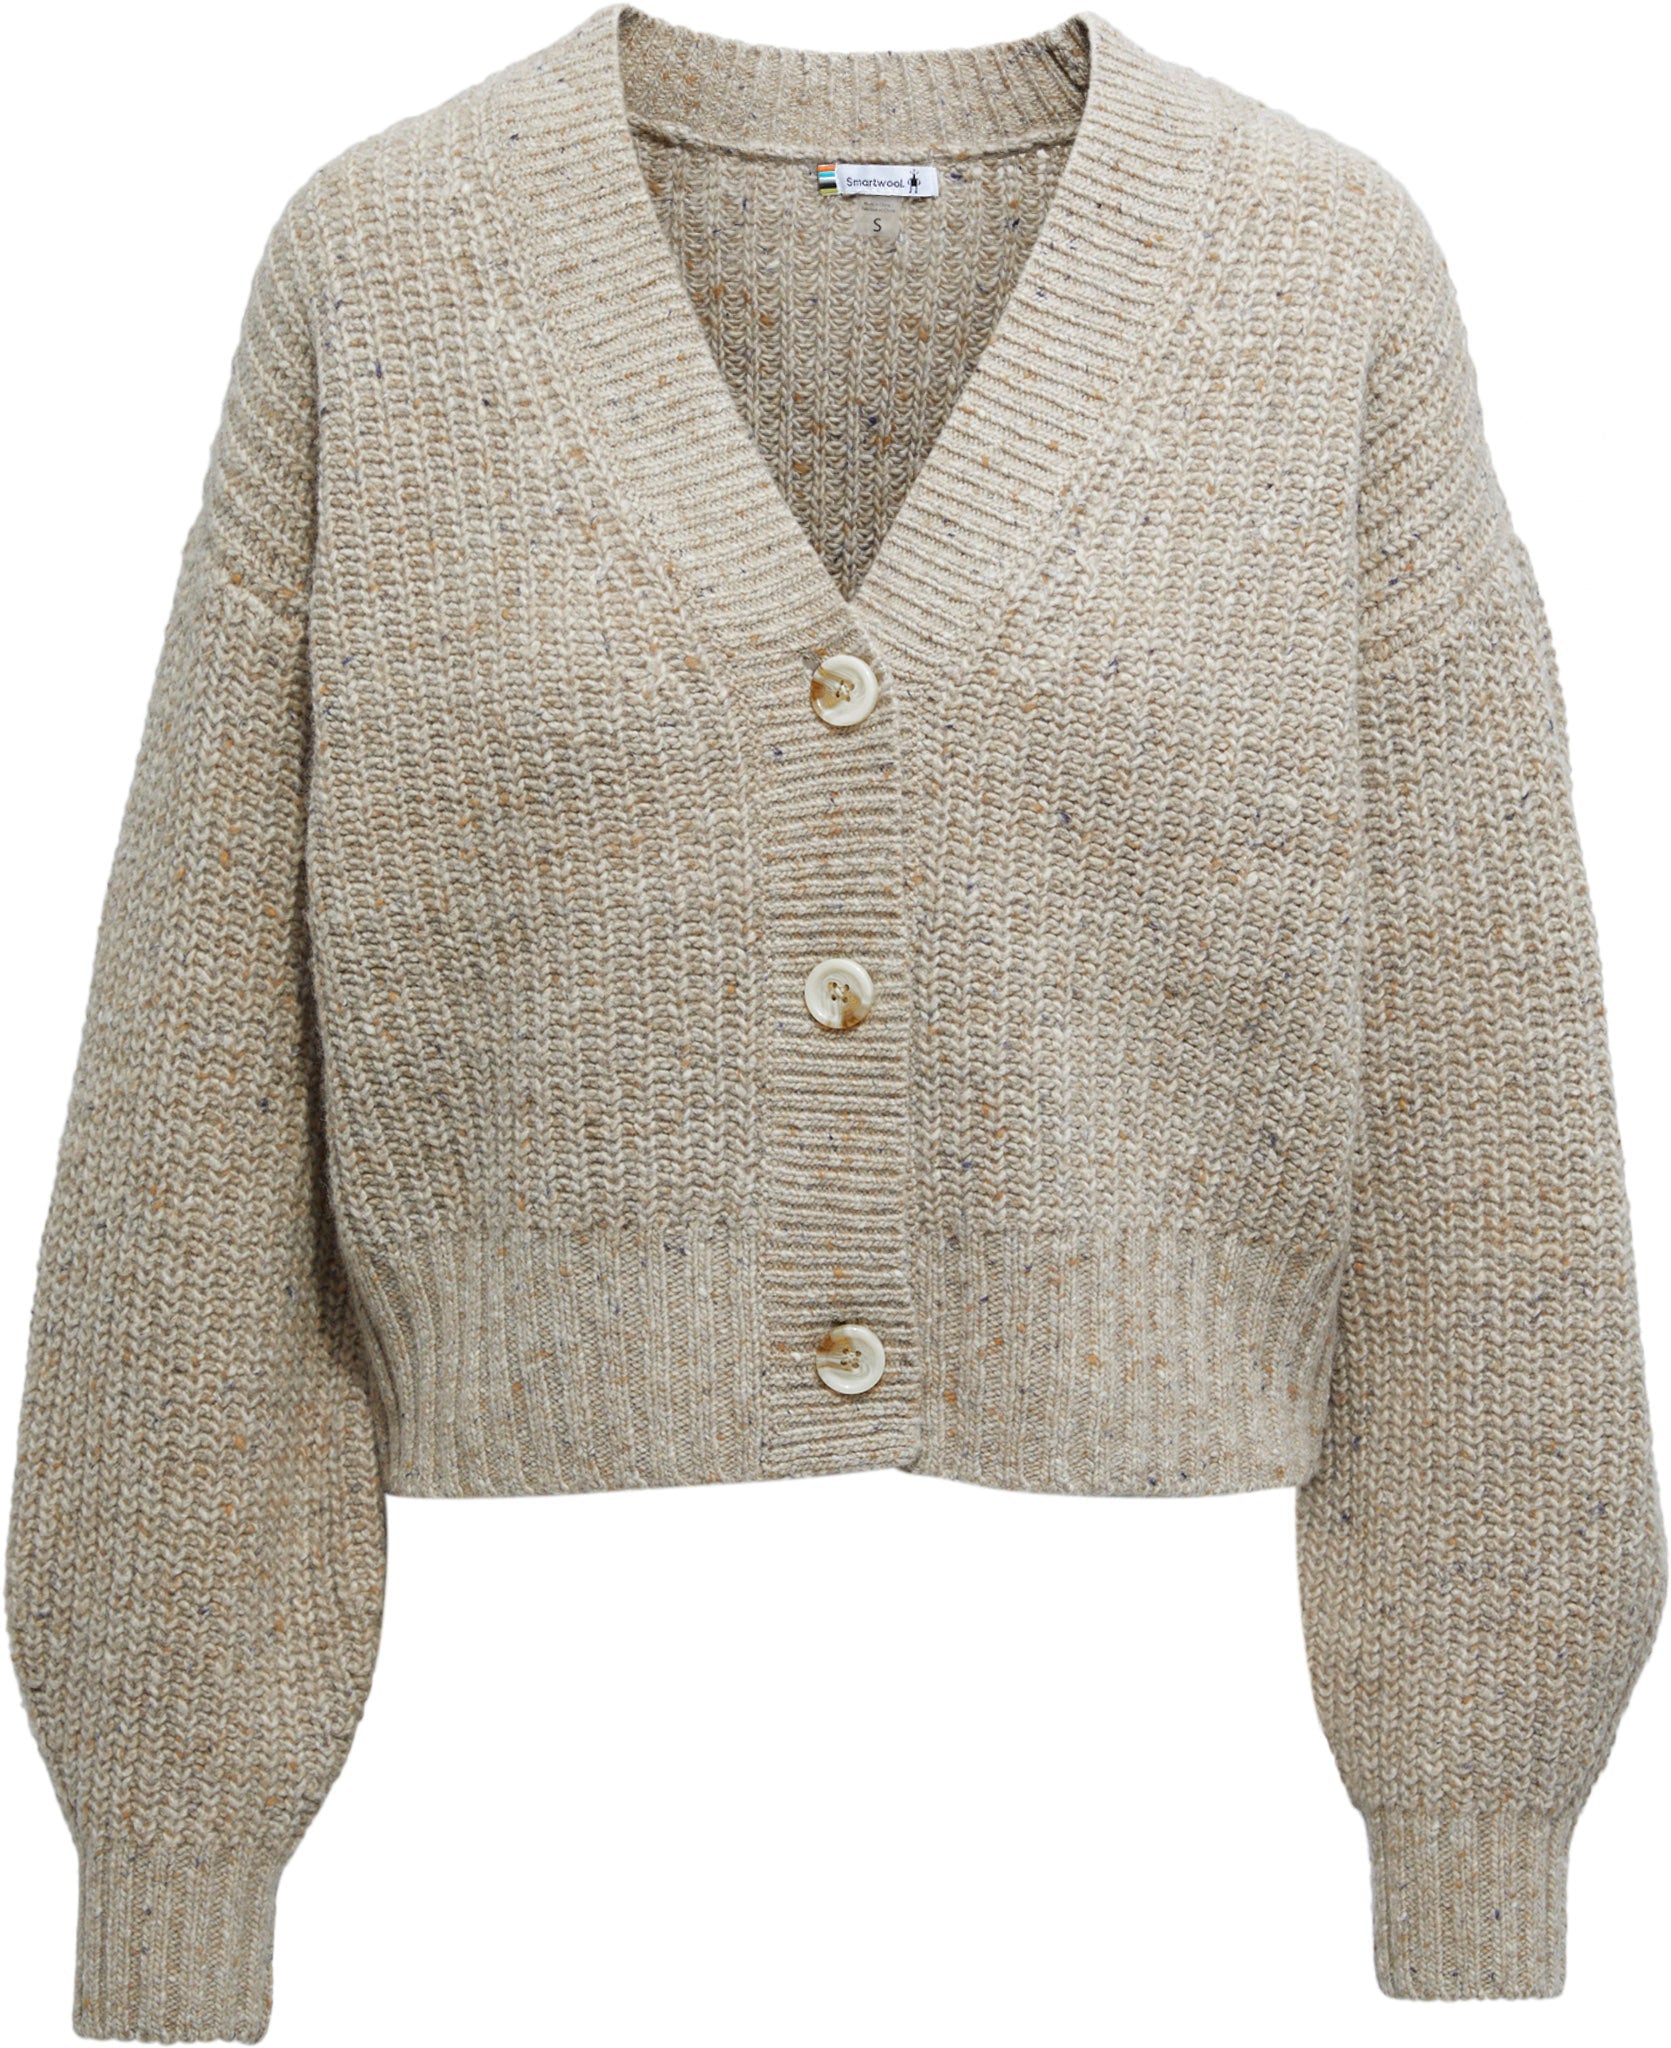 Women's Cozy Lodge Cropped Cardigan Sweater in Pecan Brown Heather